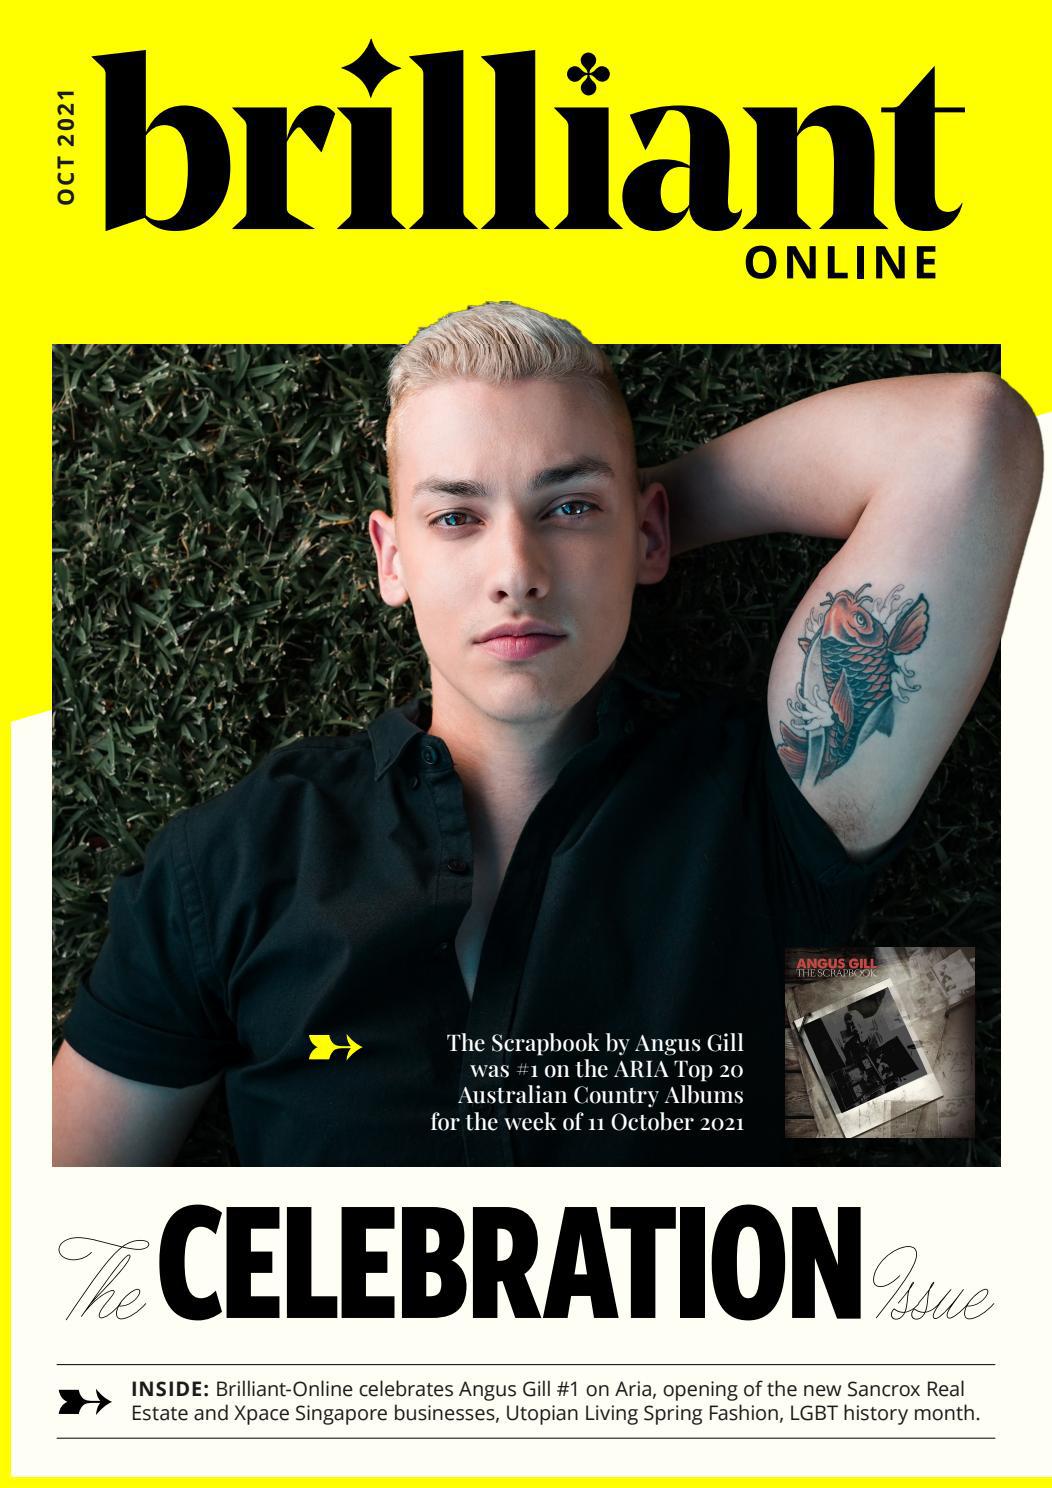 Brilliant Online Magazine. The Celebration Issue, October 2021